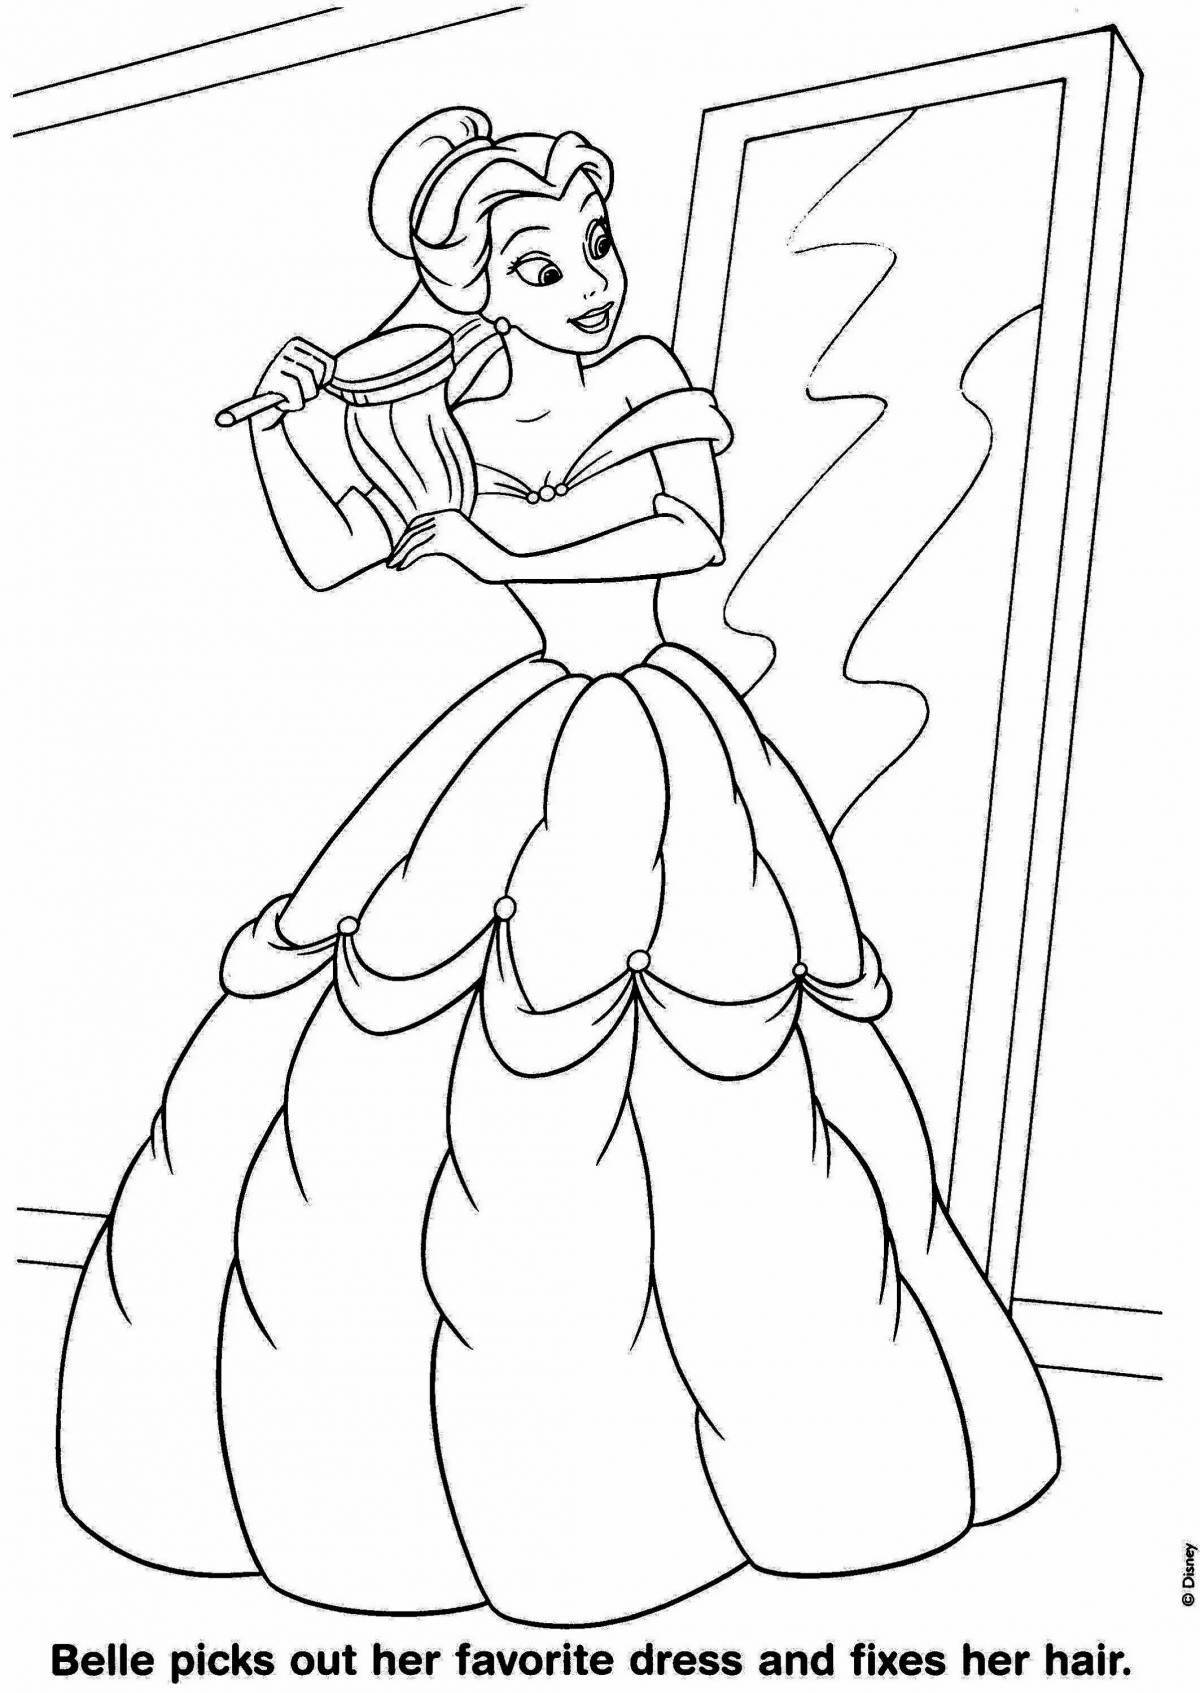 Coloring page joyful princess belle